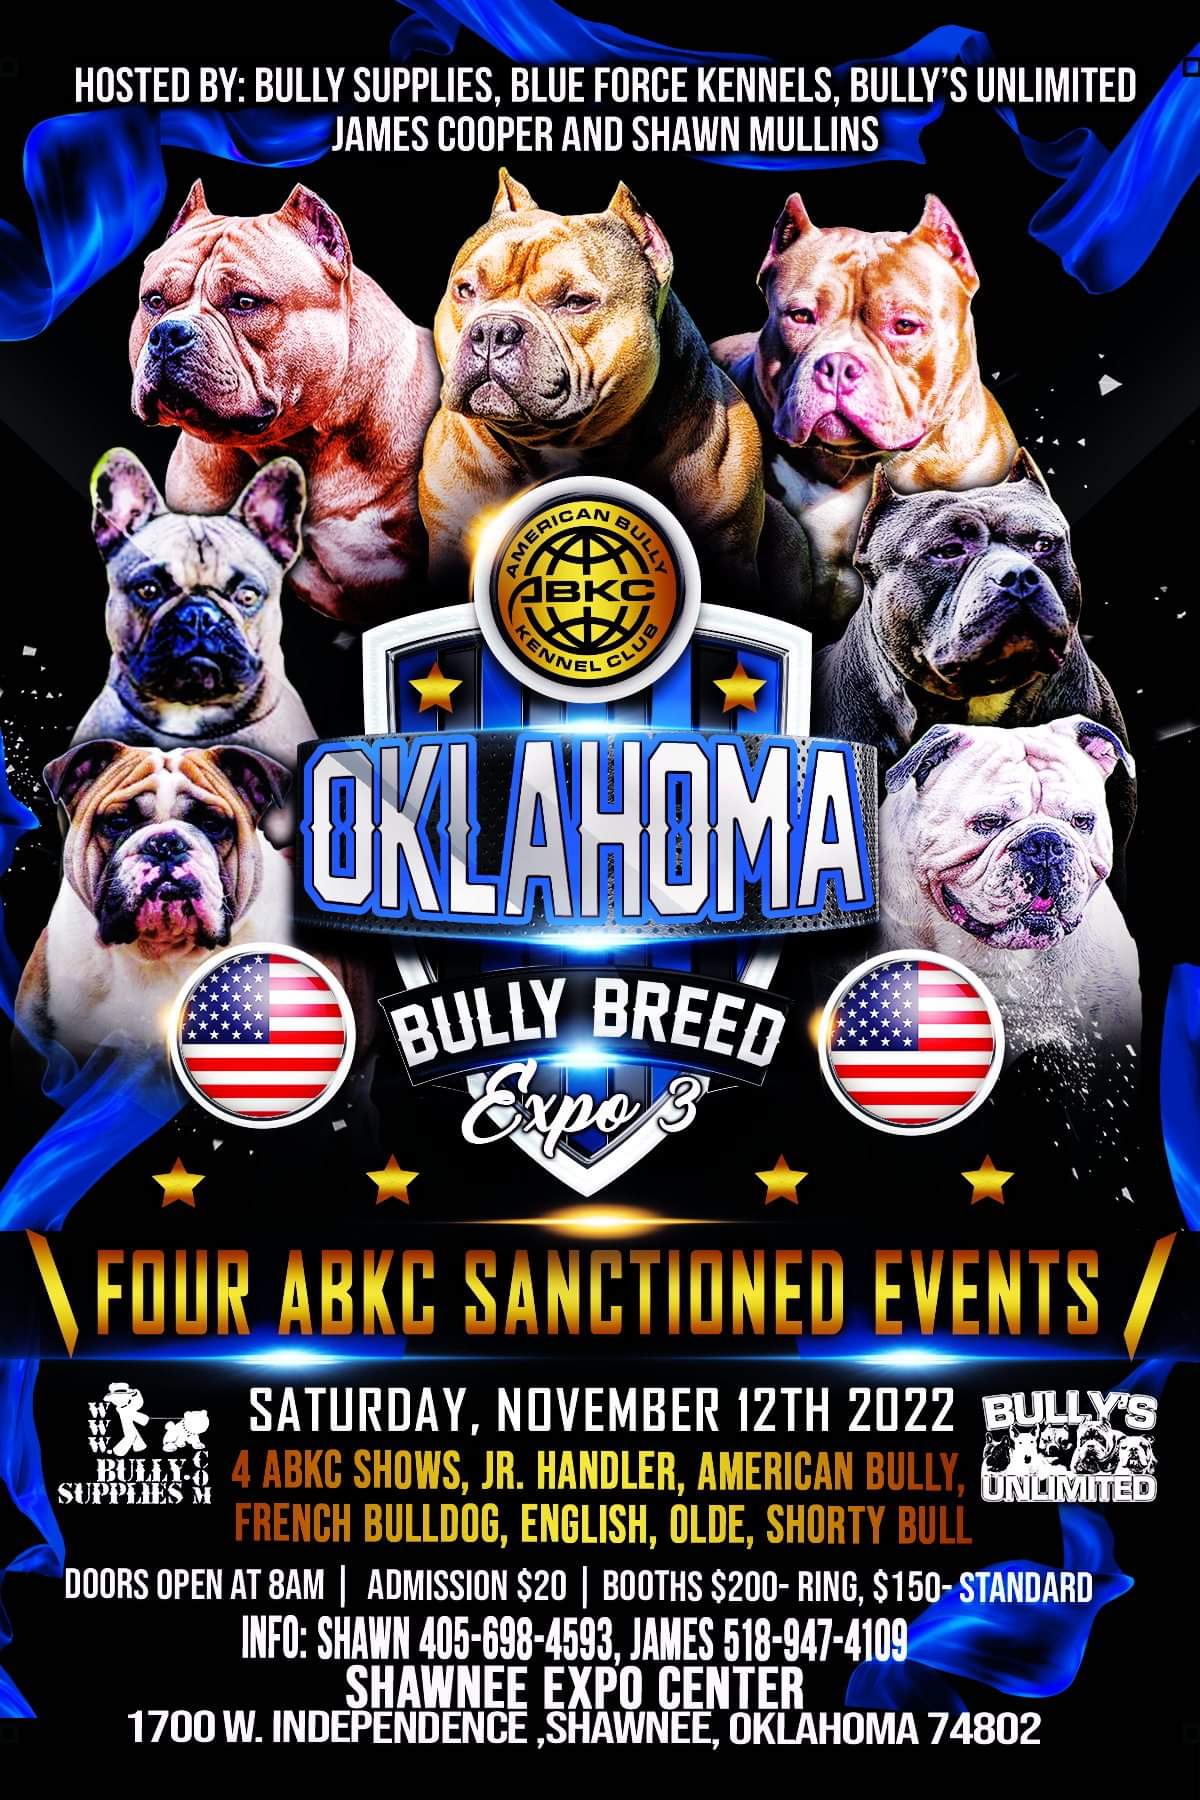 Oklahoma Bully Breed Expo 3 – THE AMERICAN BULLY KENNEL CLUB